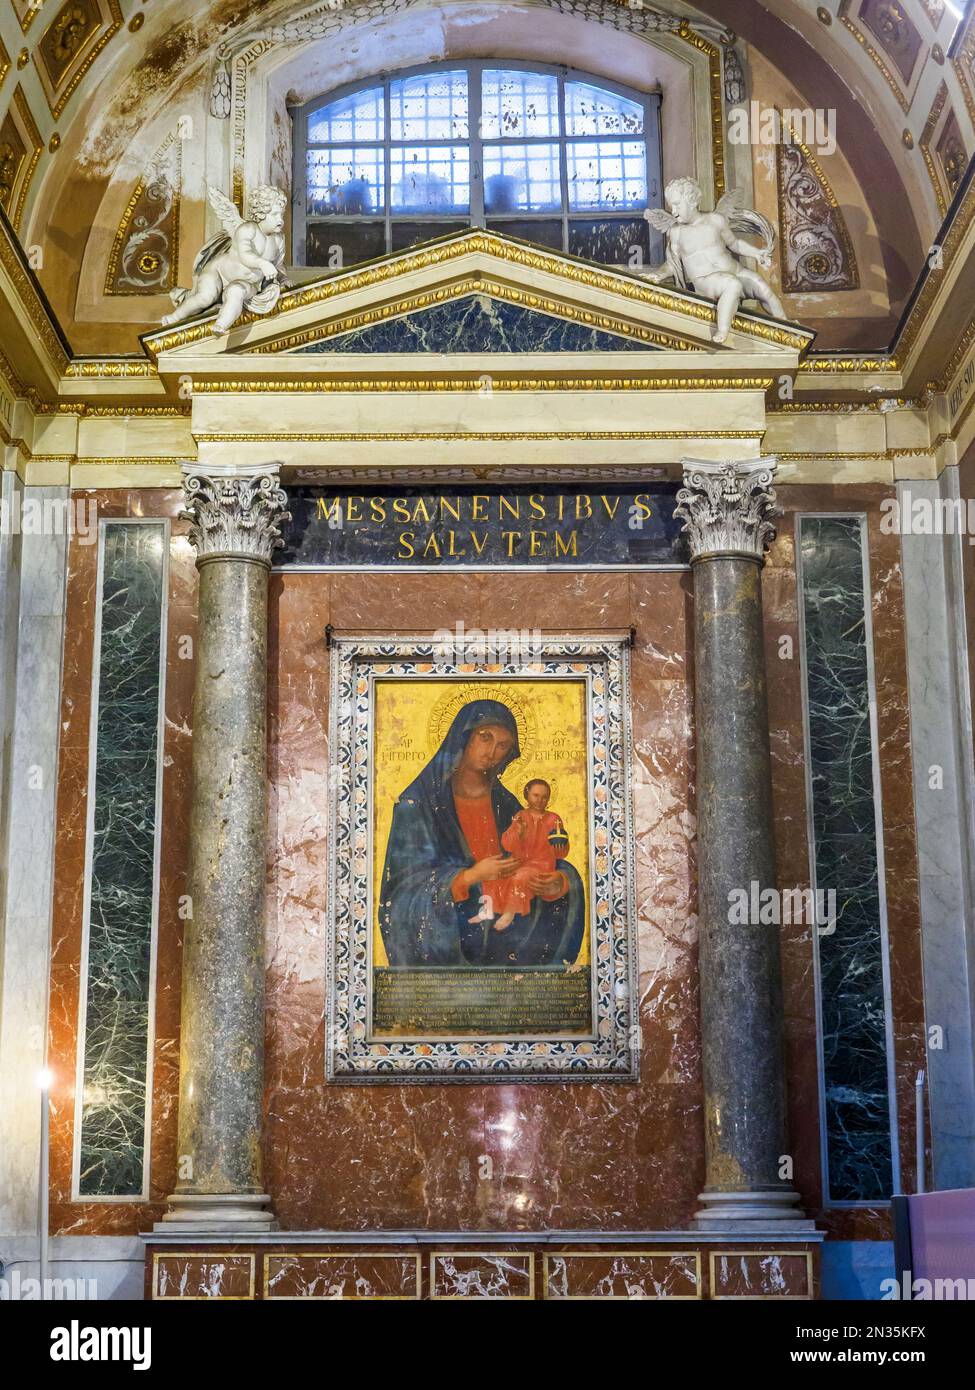 Chapel of Madonna della Lettera - Palermo Cathedral, Palermo, Sicily, Italy. Stock Photo